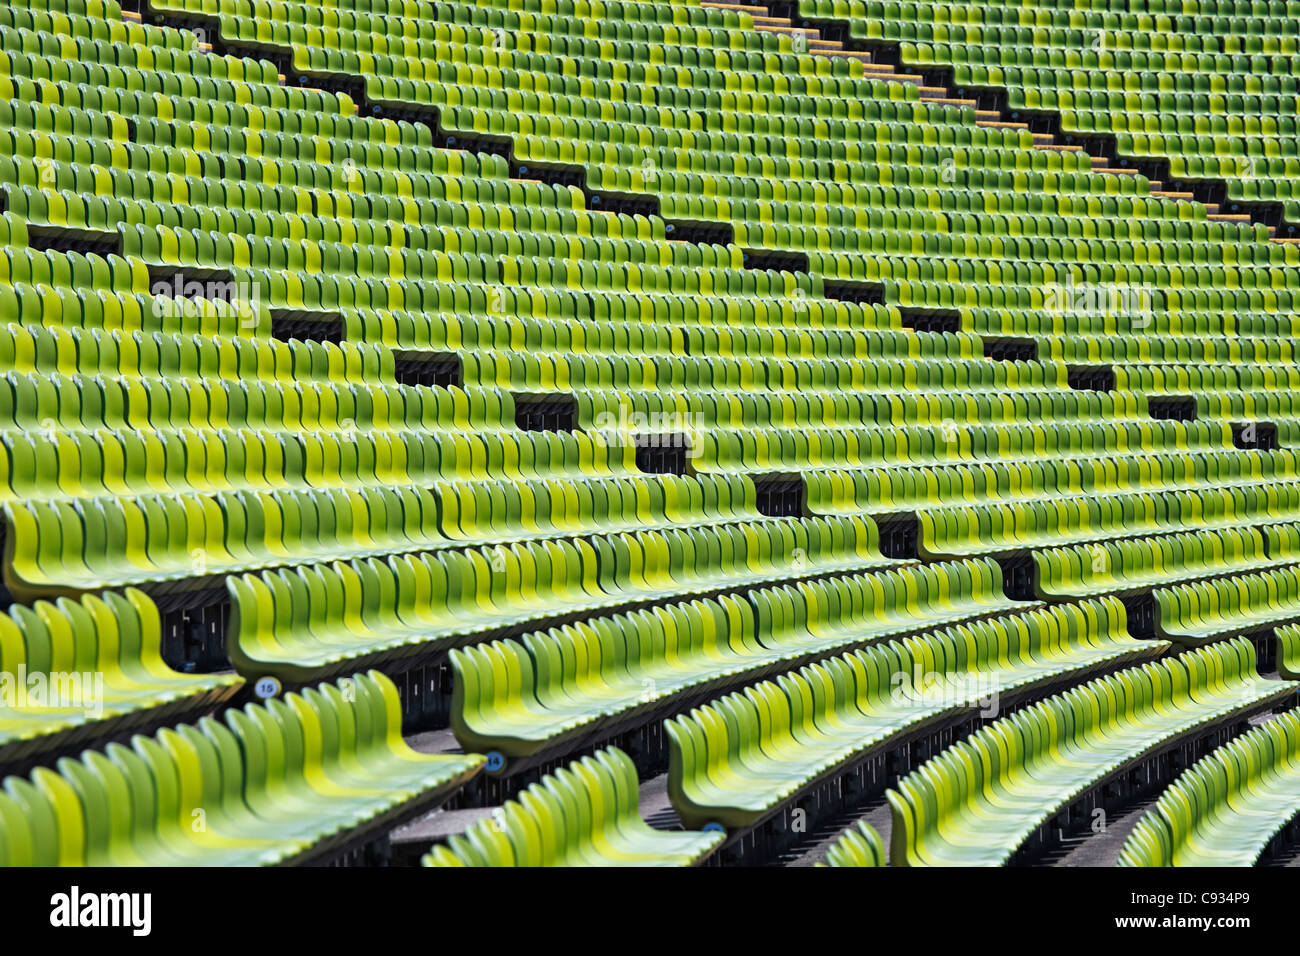 Olympic Stadium Munich Seating Chart